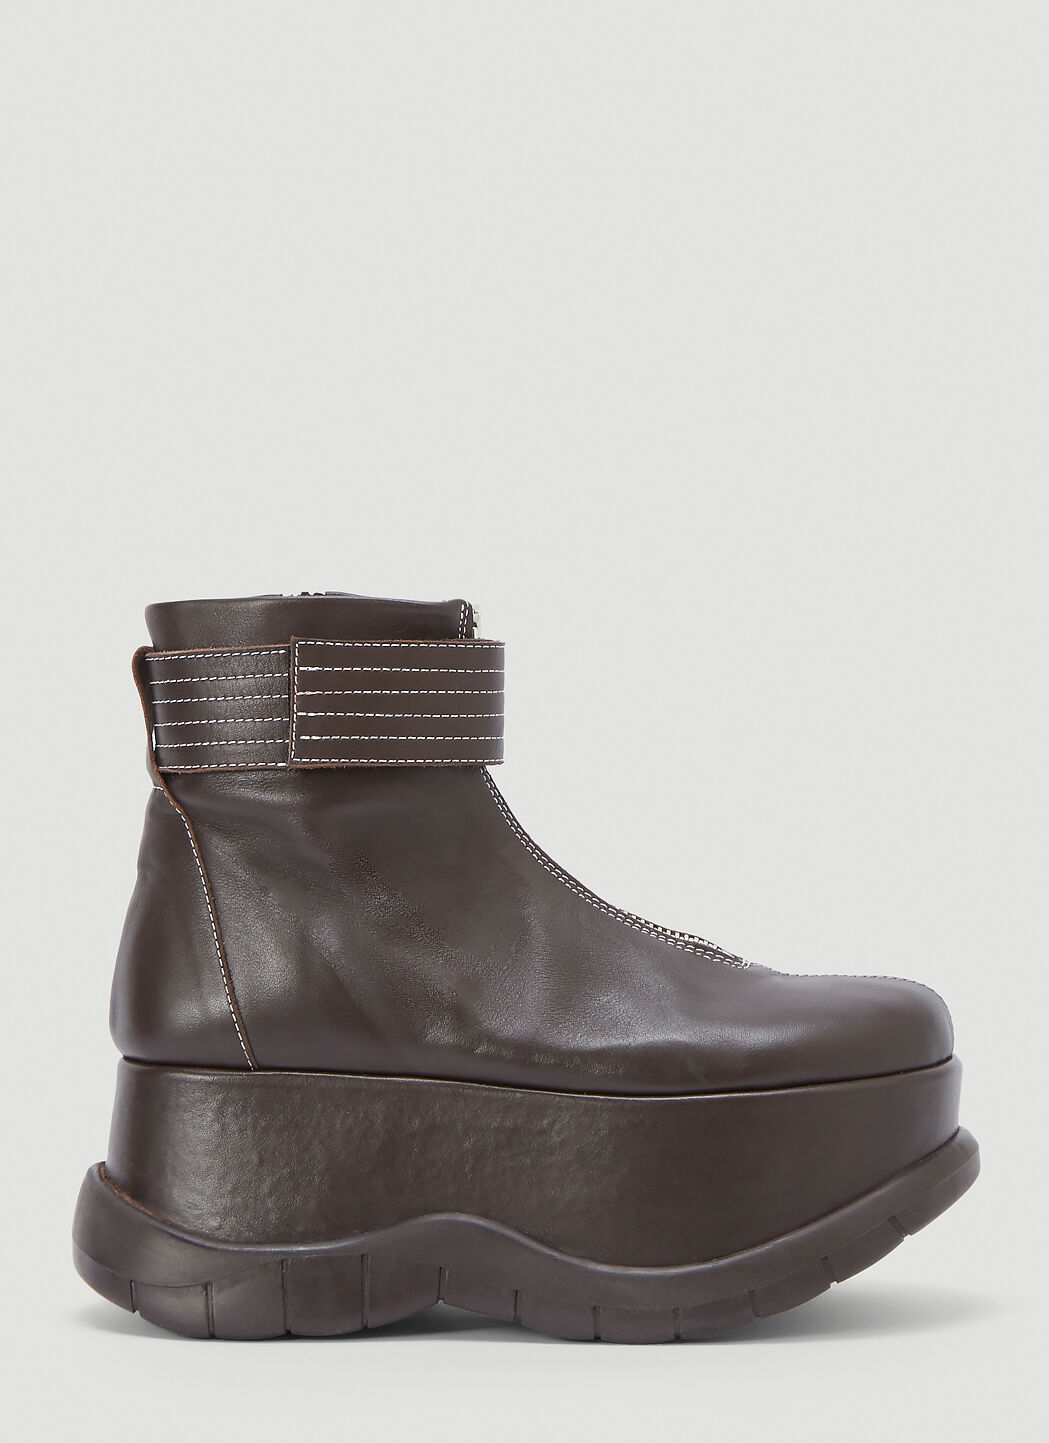 Saint Laurent Platform Leather Boots 블랙 sla0231015